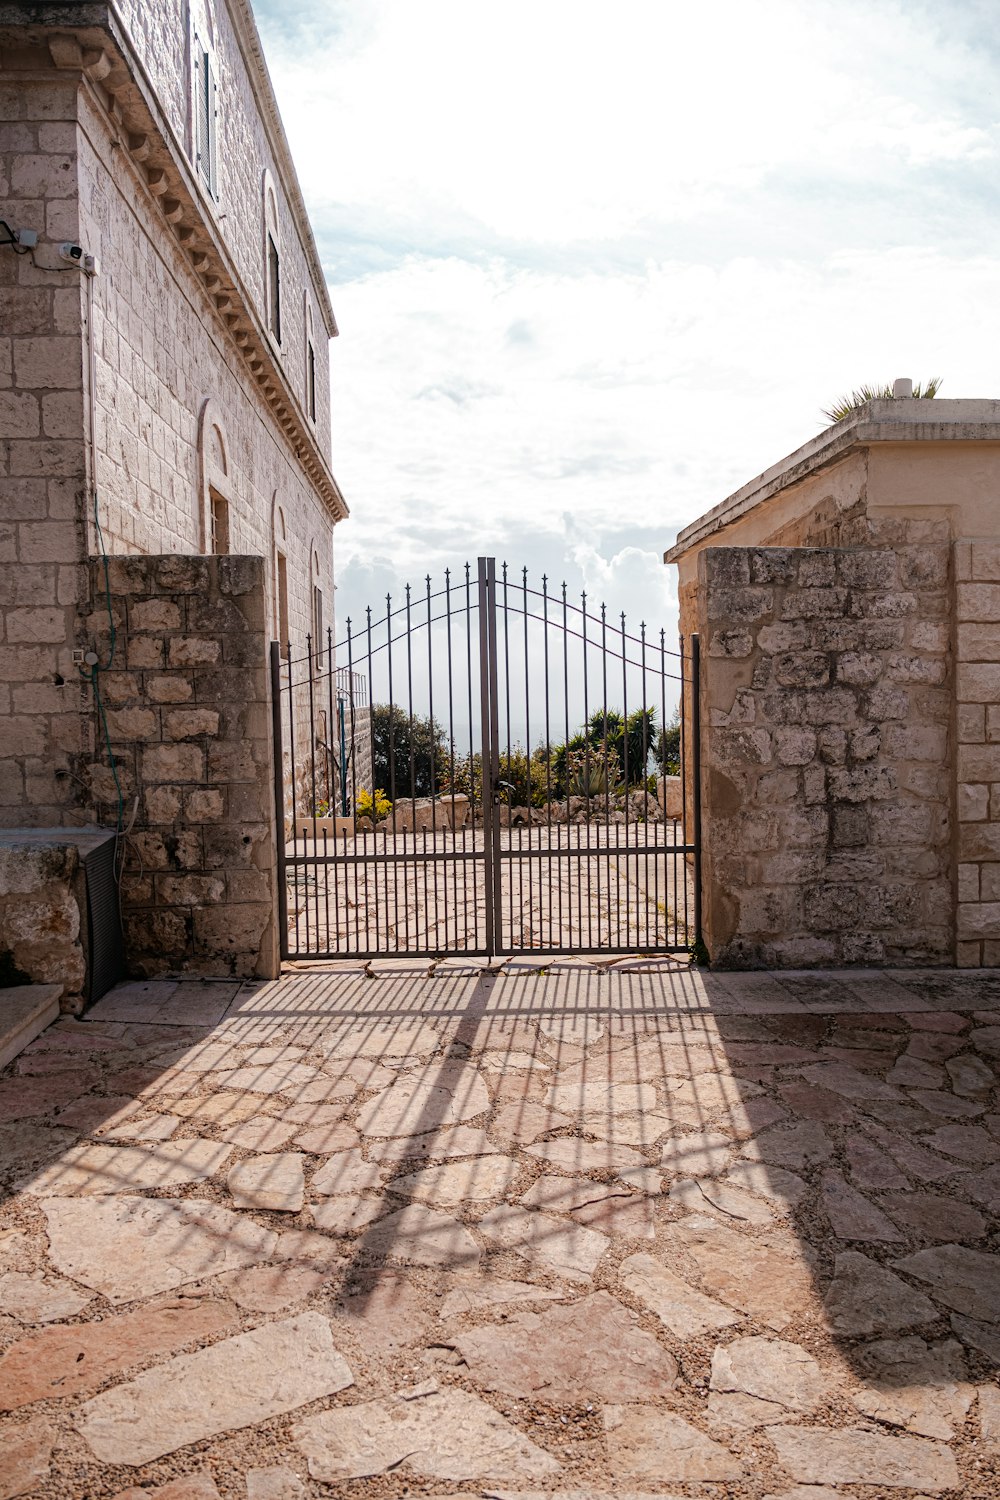 a gate in a stone courtyard